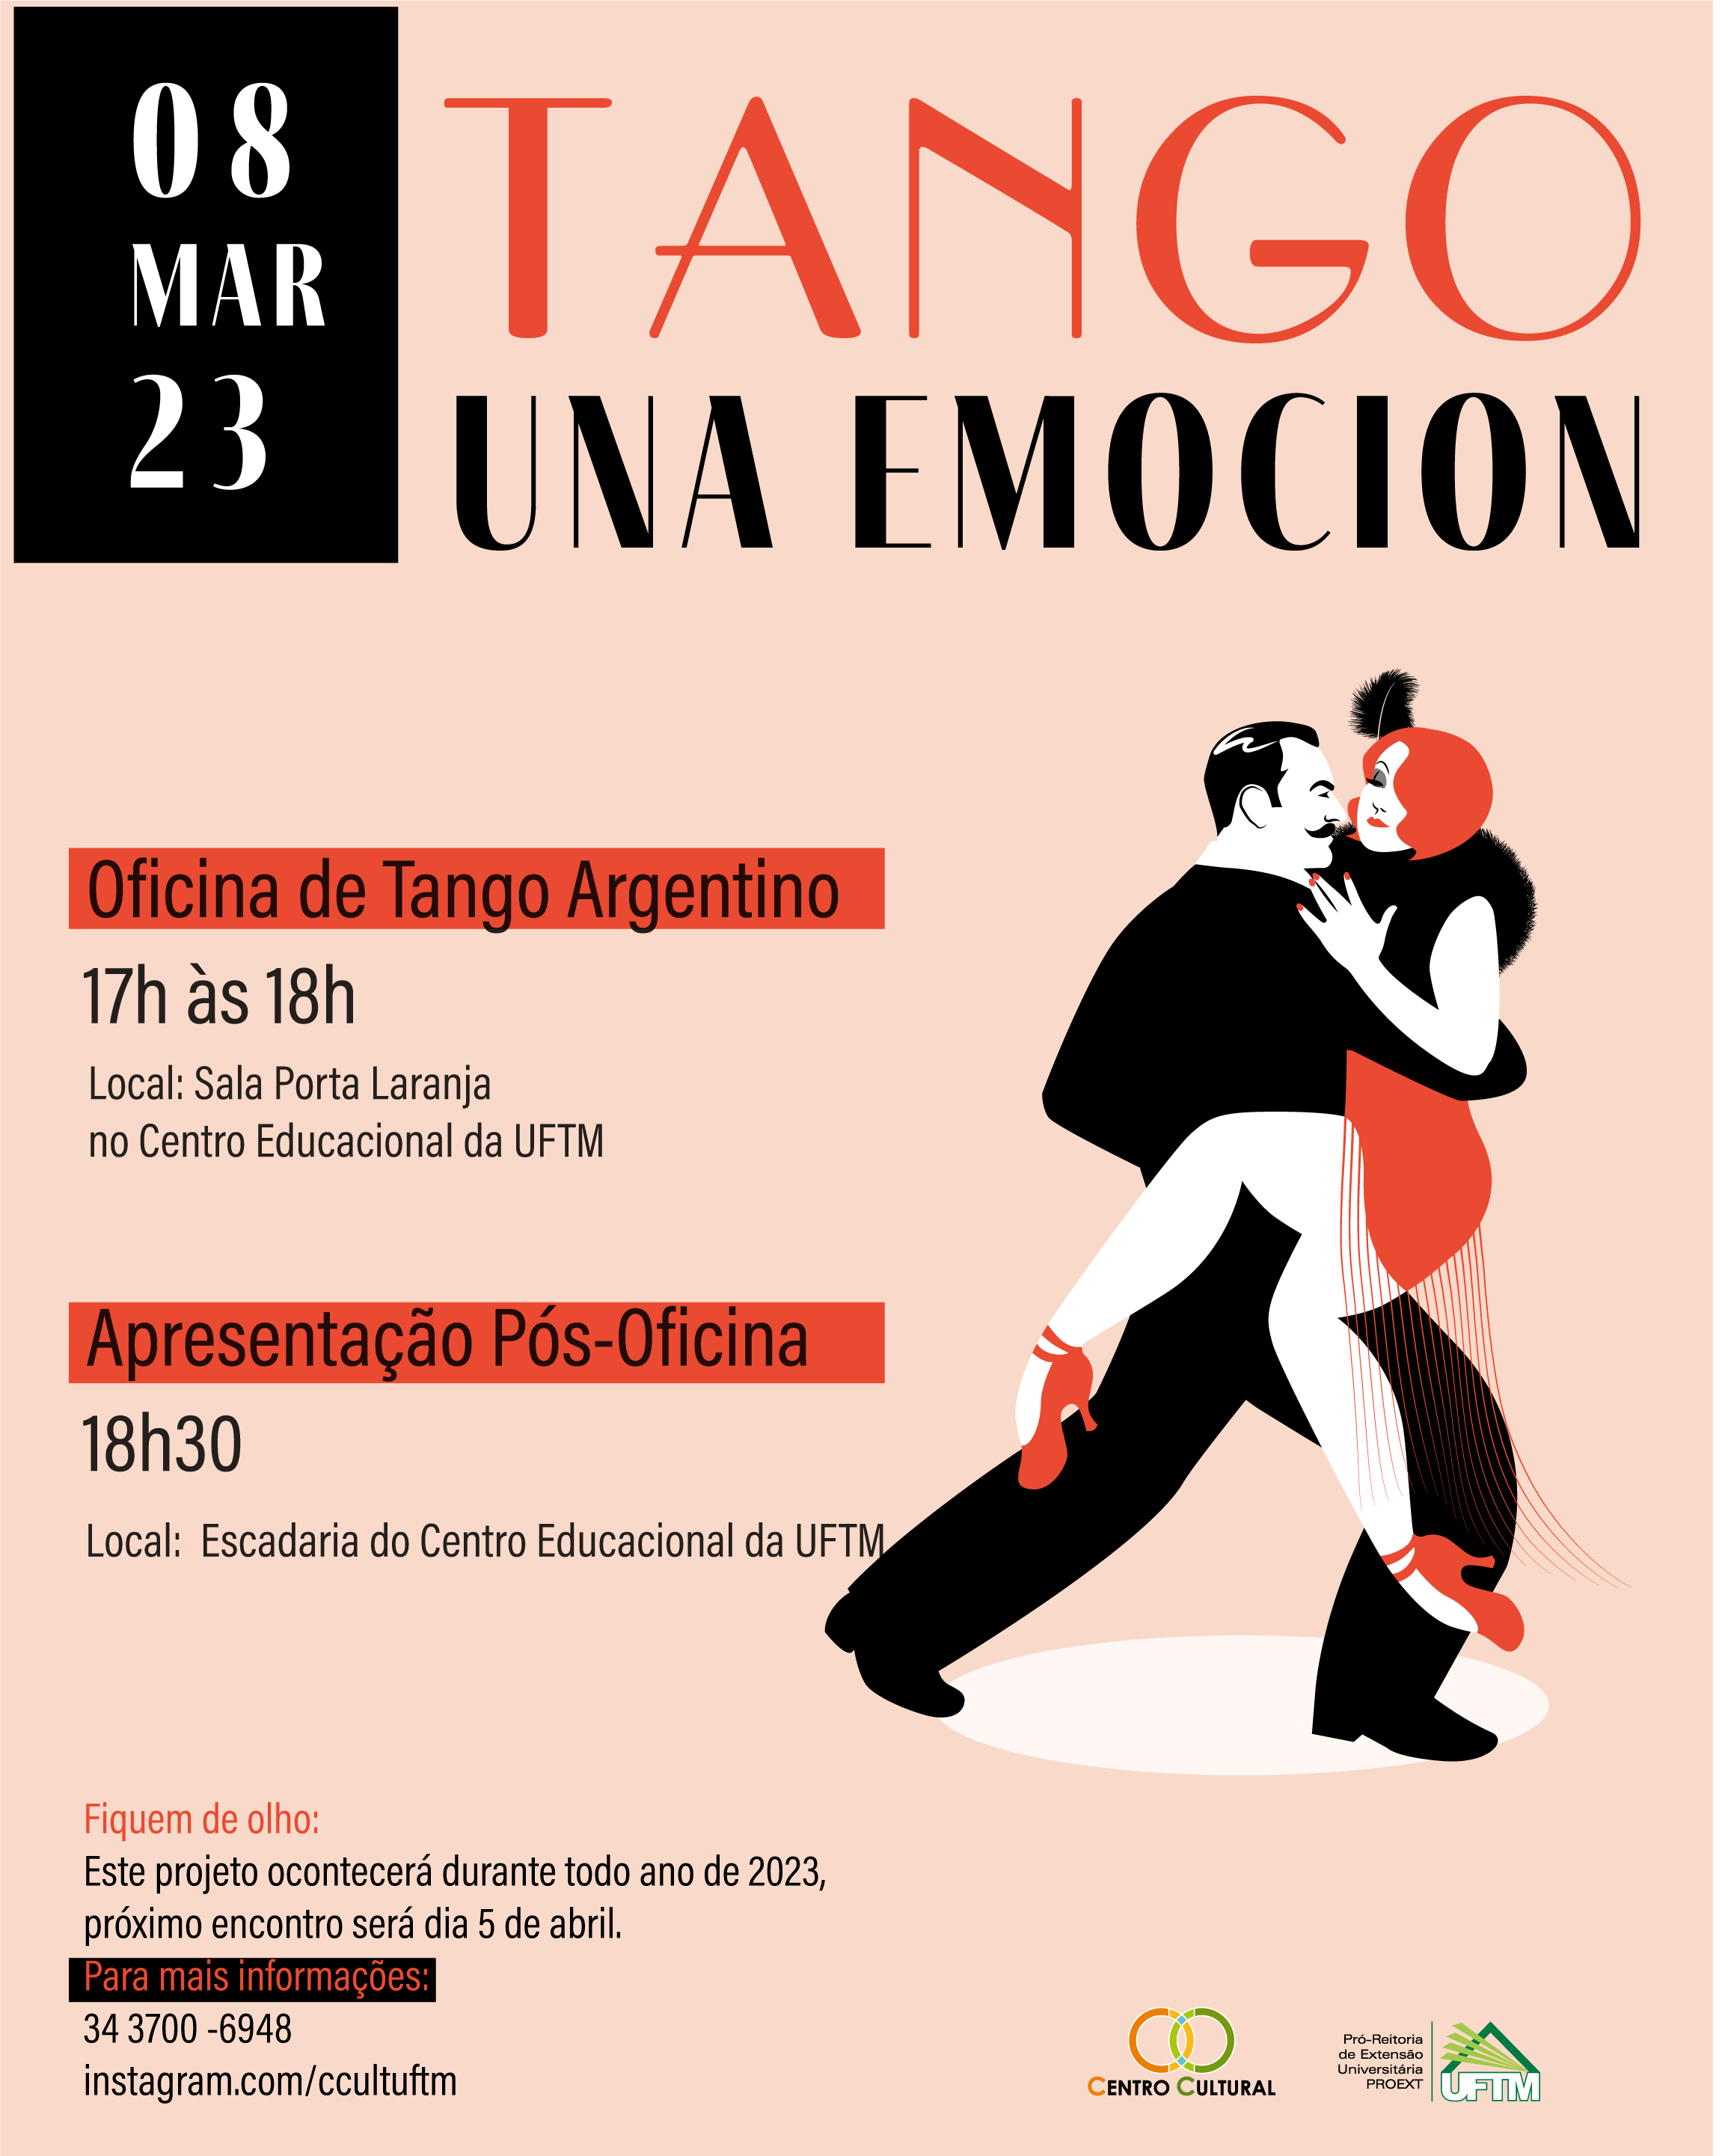 O próximo tango